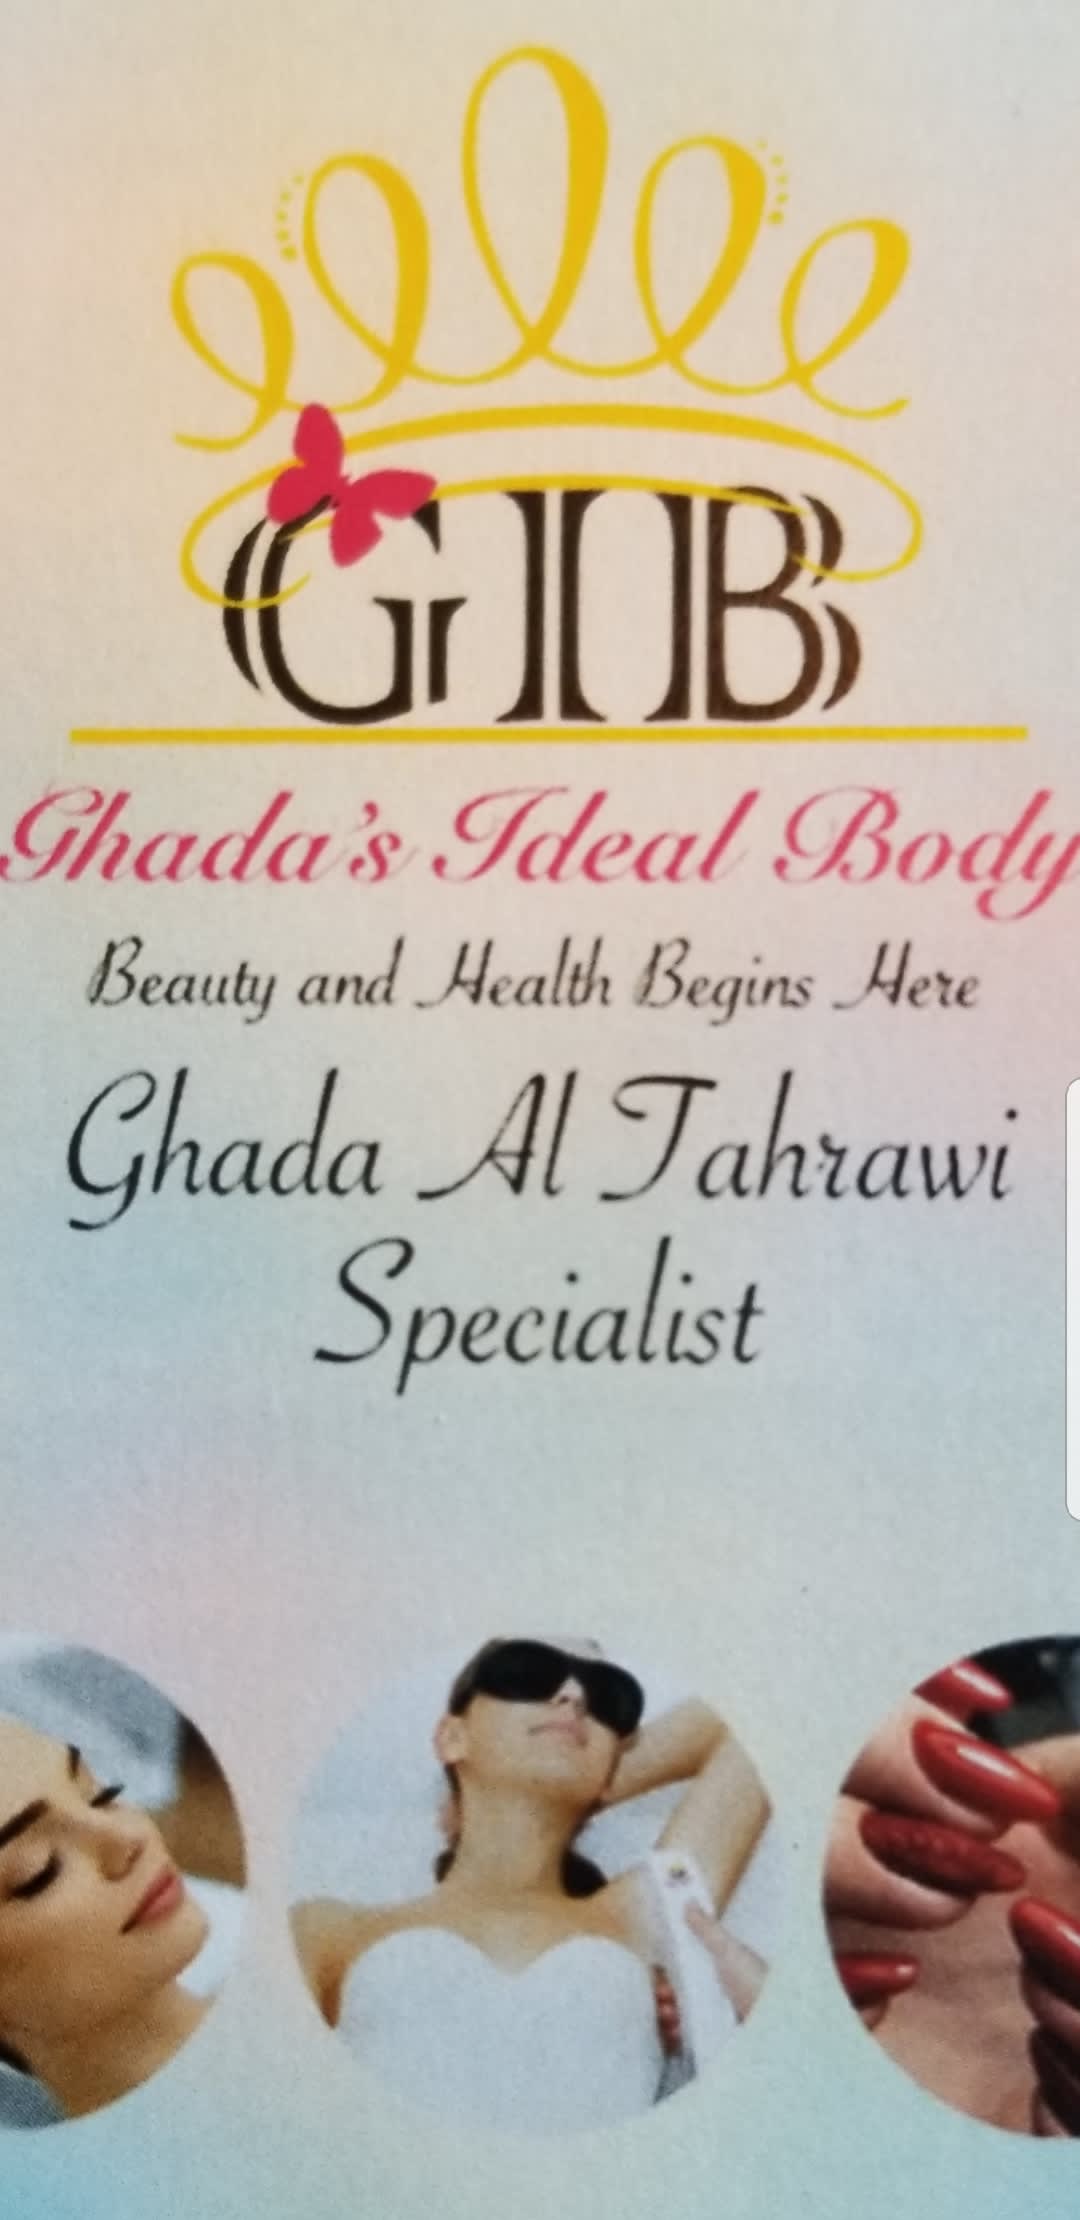 Ghada's Ideal Body